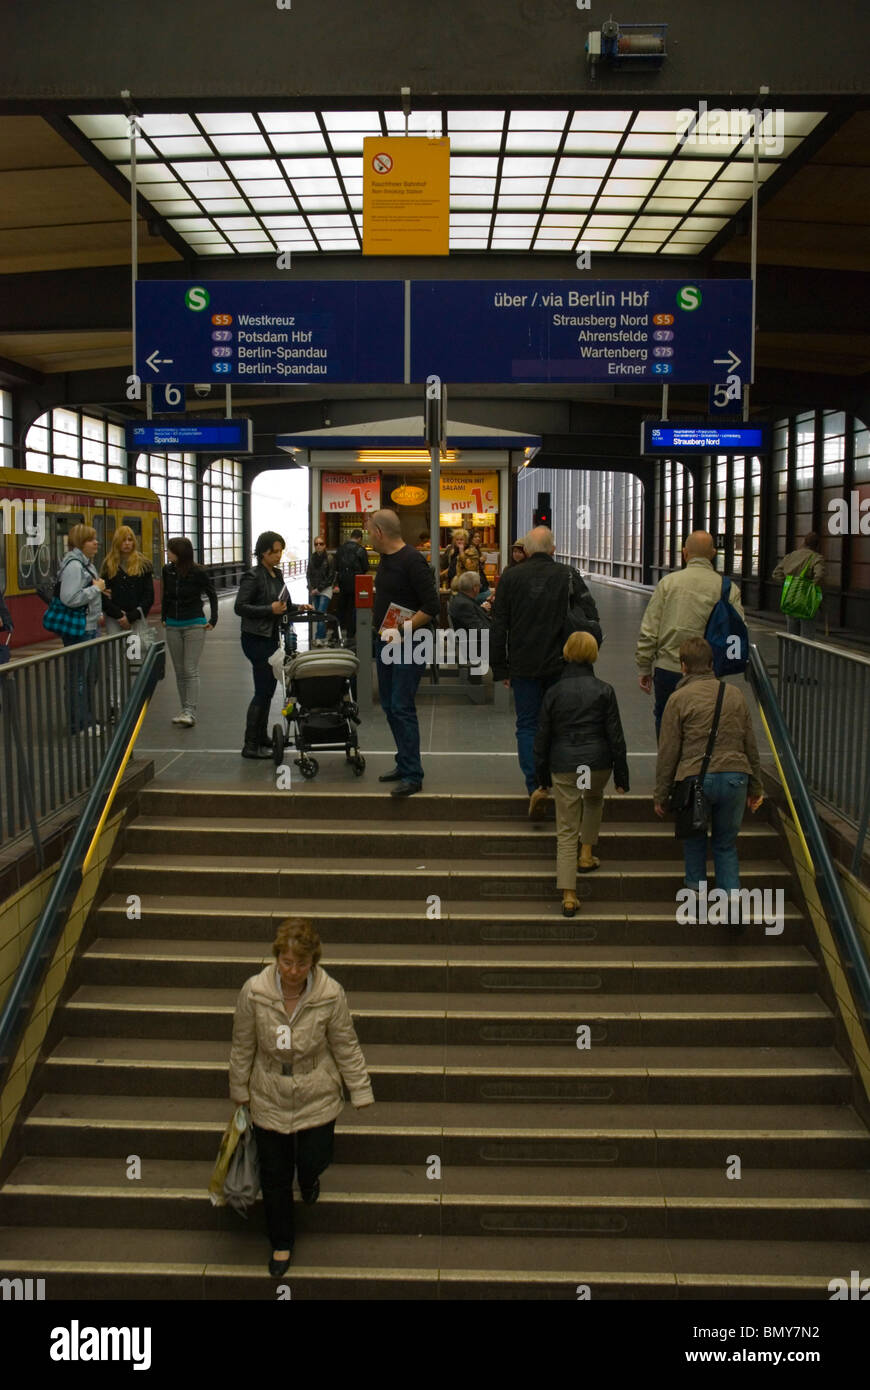 Tiergarten S-bahn station Berlin Germany Europe Stock Photo